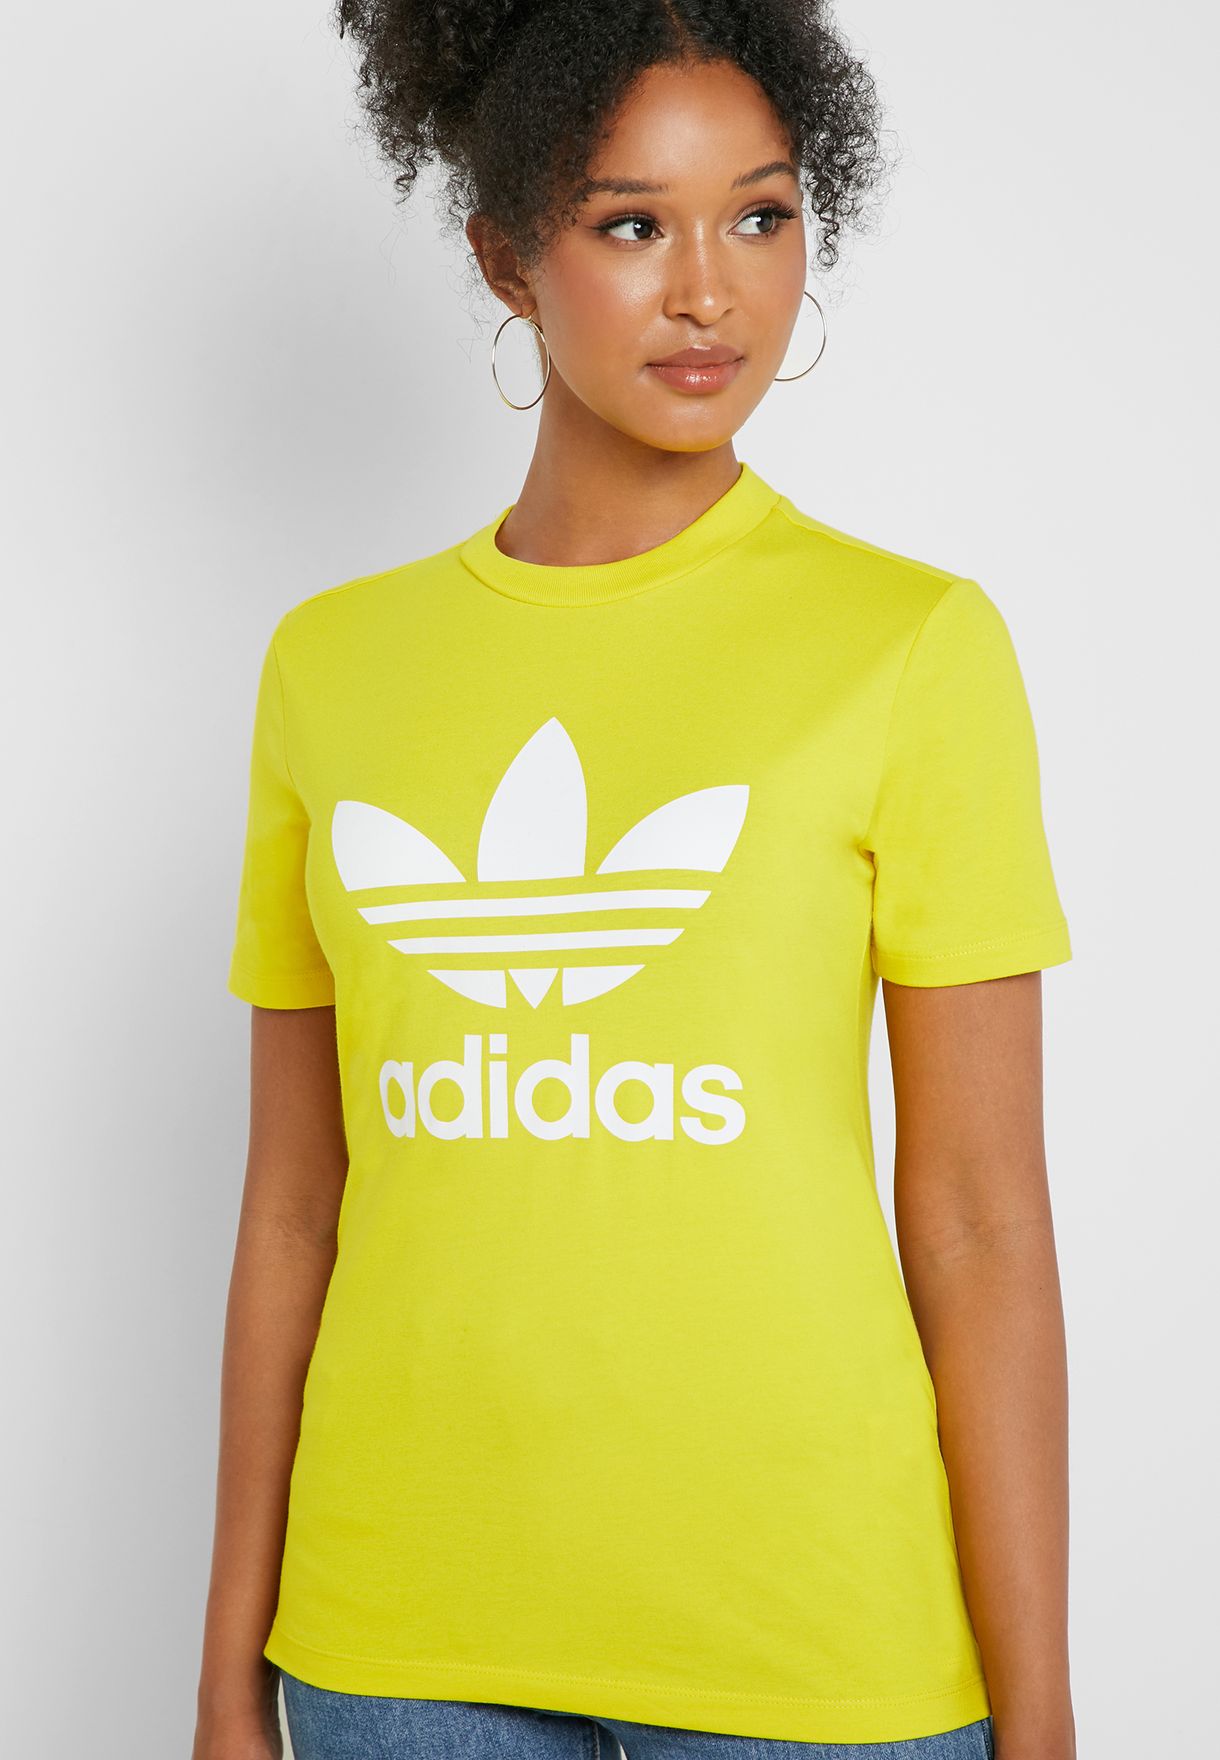 womens yellow adidas t shirt